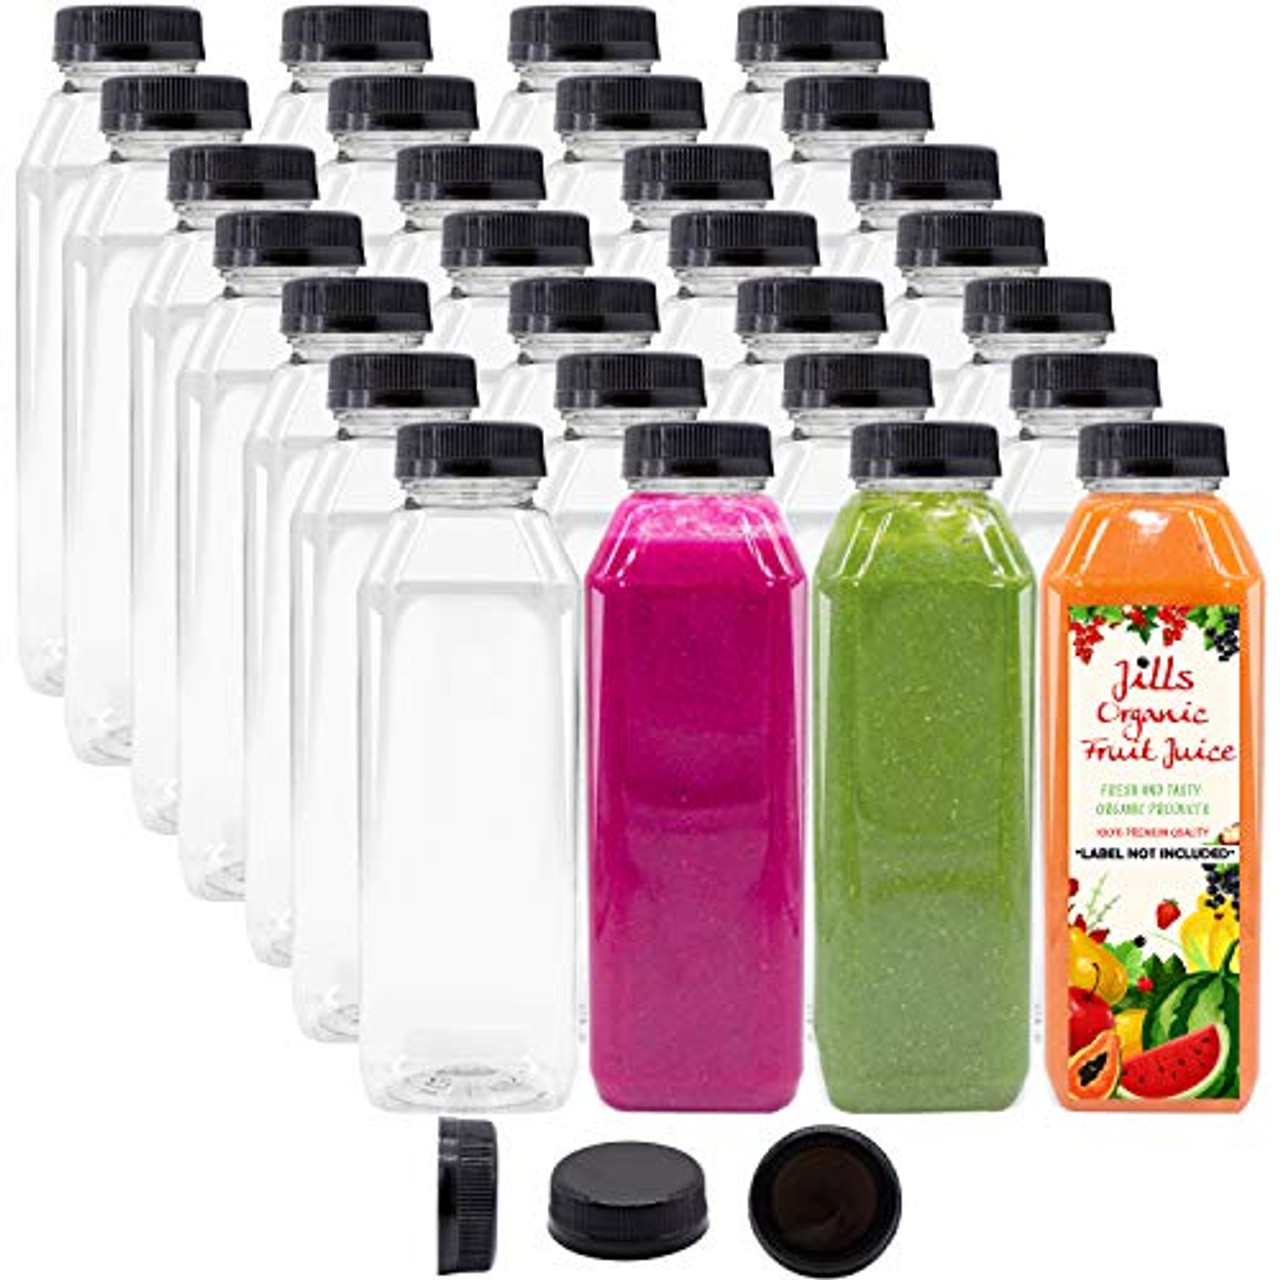 16 OZ Empty PET Plastic Juice Bottles - Pack of 35 Reusable Clear  Disposable Milk Bulk Containers with Black Tamper Evident Caps Lids